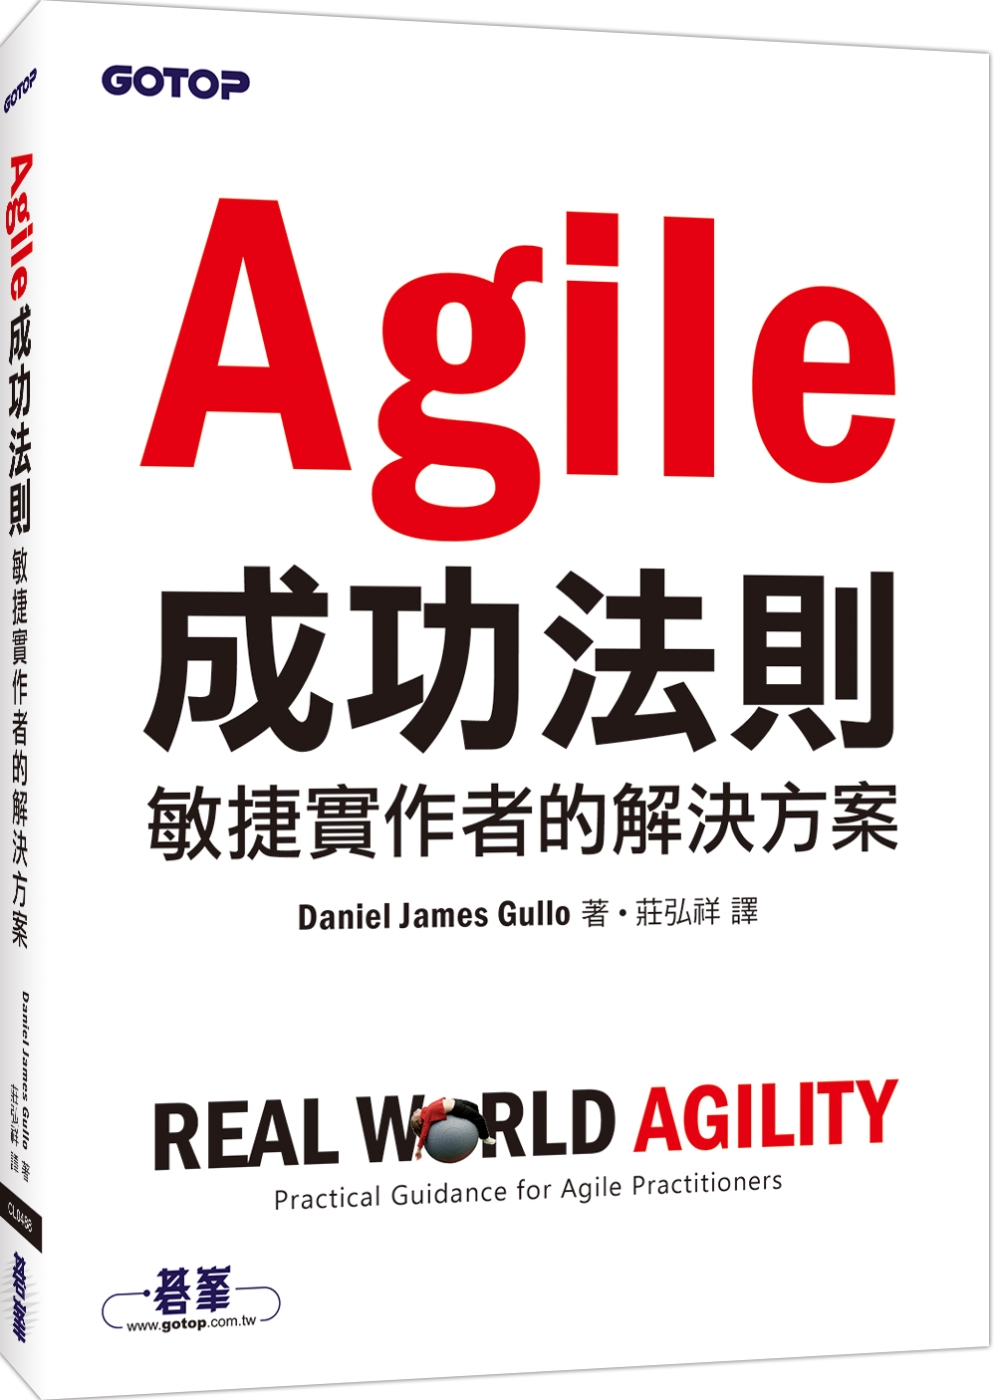 Agile 成功法則：敏捷實作者的解決方案